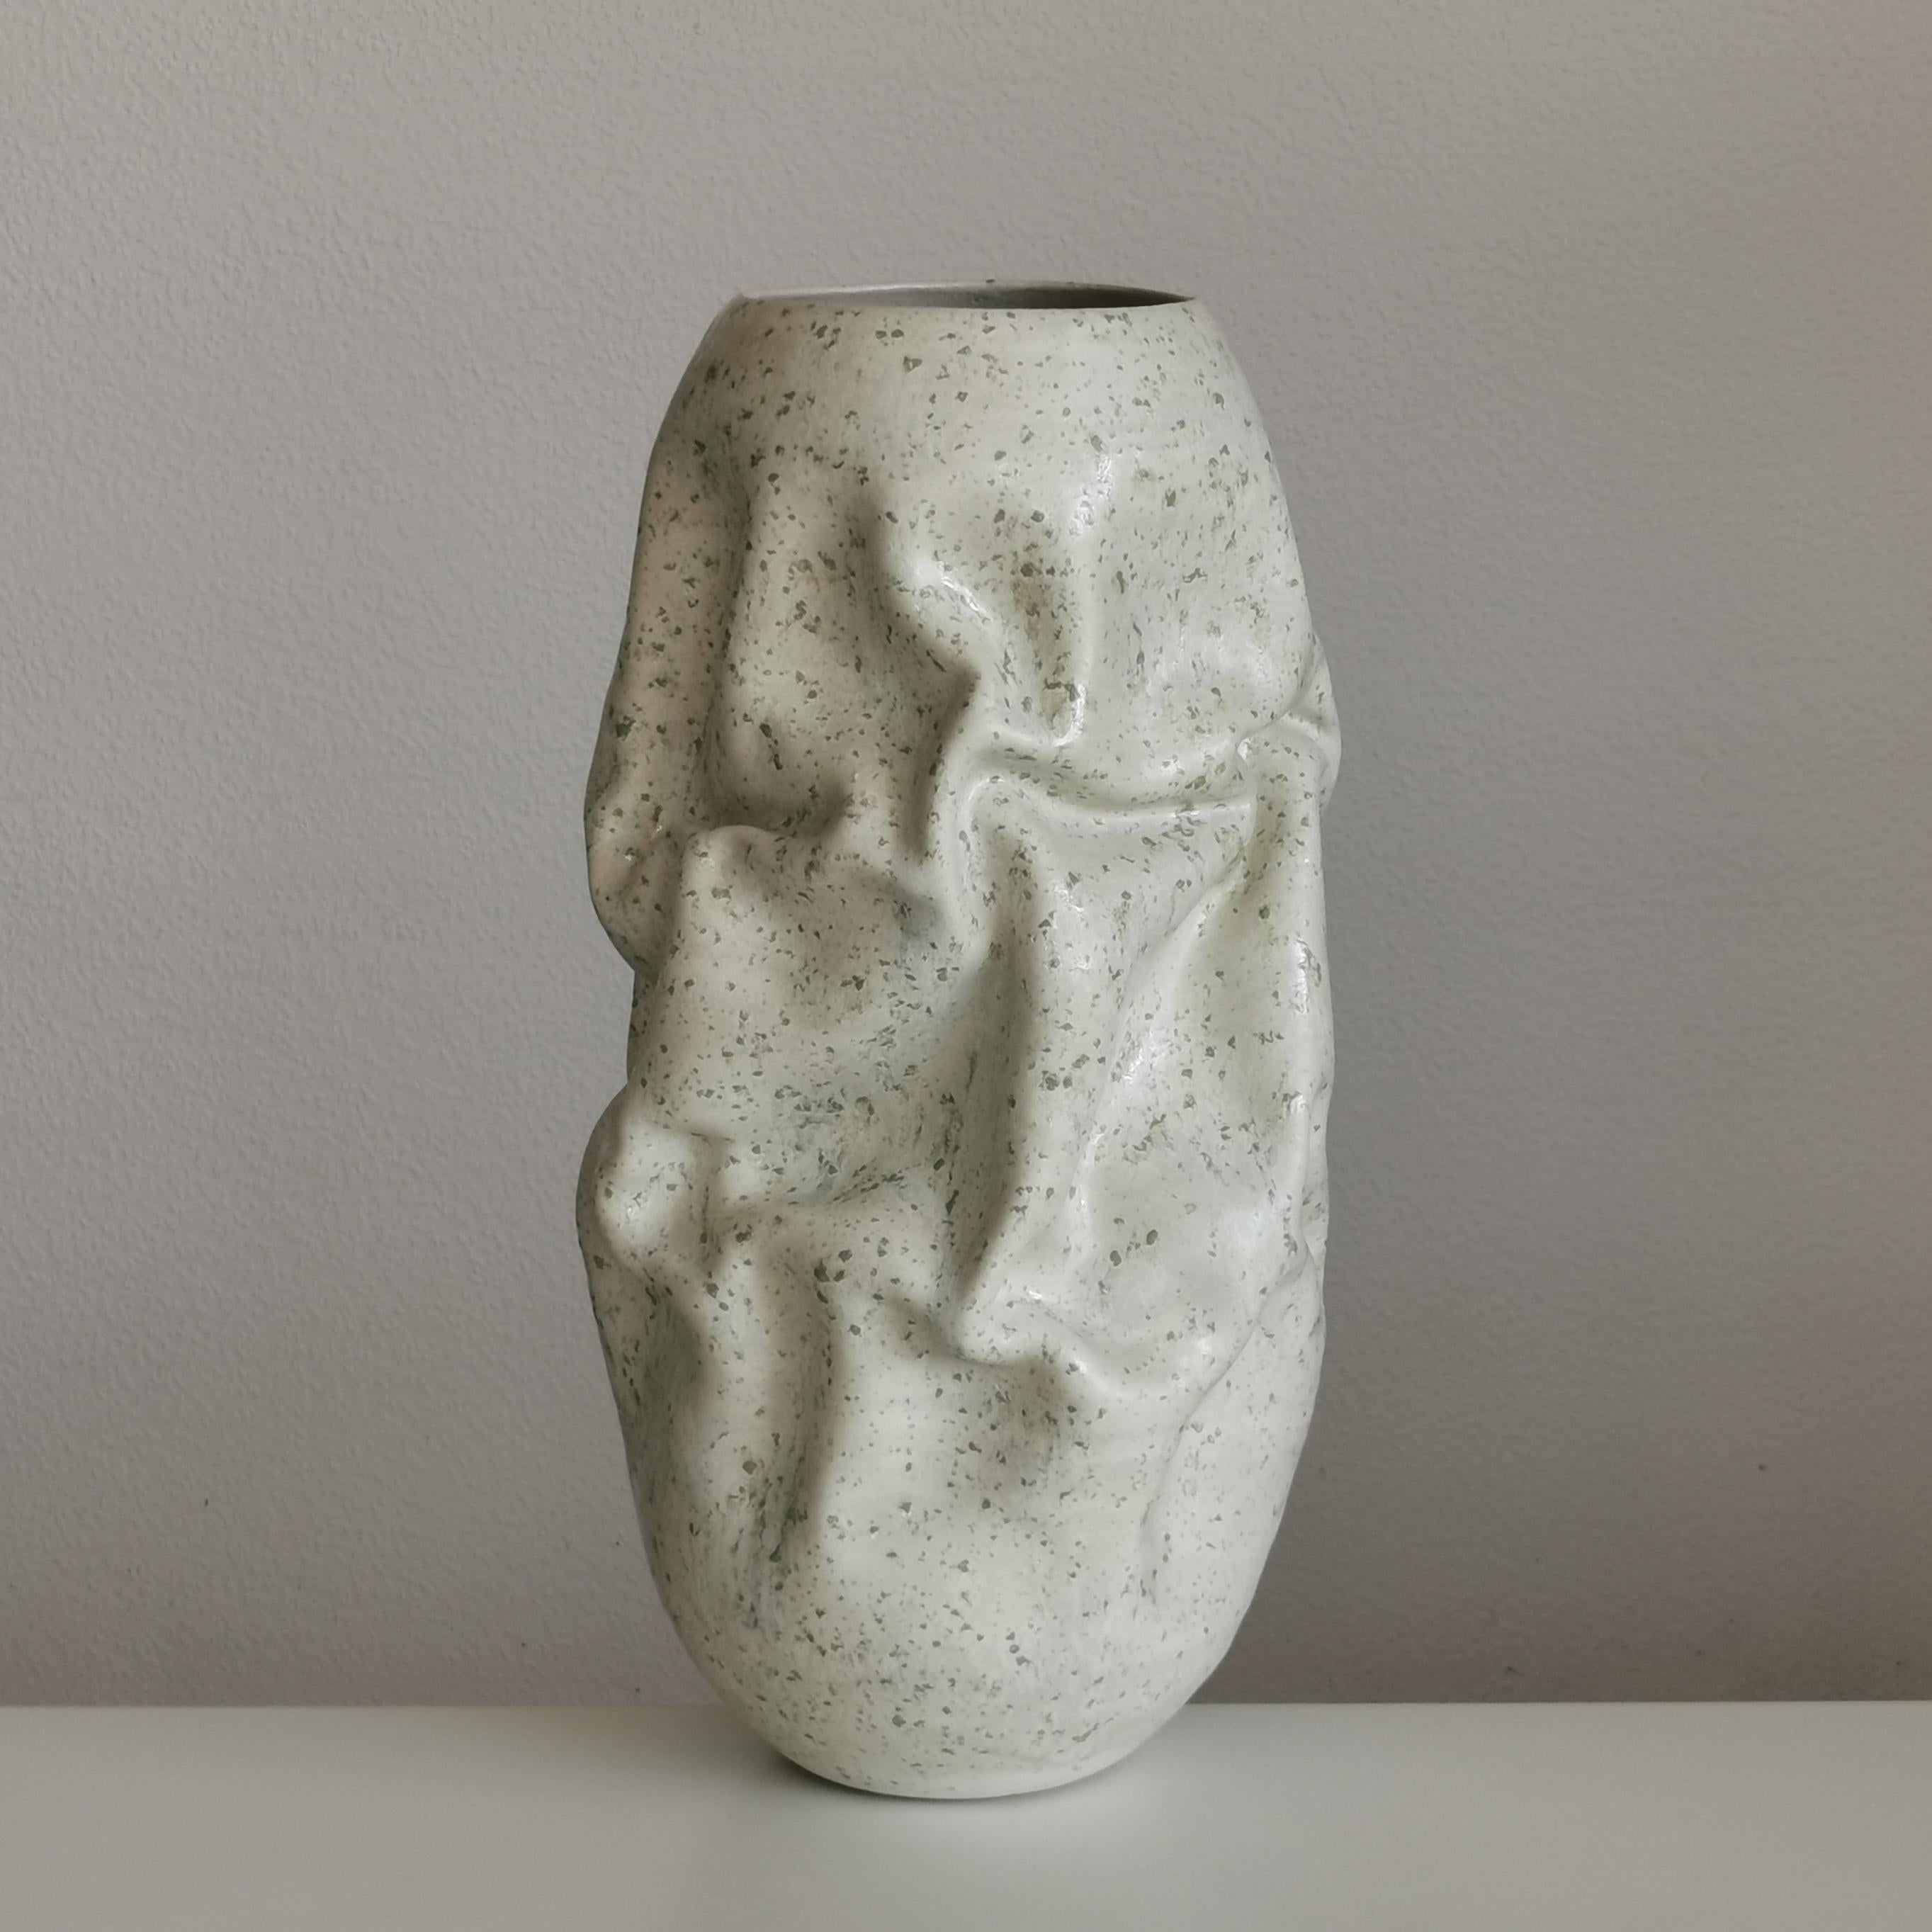 Medium White Crumpled Form, Green Chrystals, Vessel No.128, Ceramic Sculpture For Sale 2